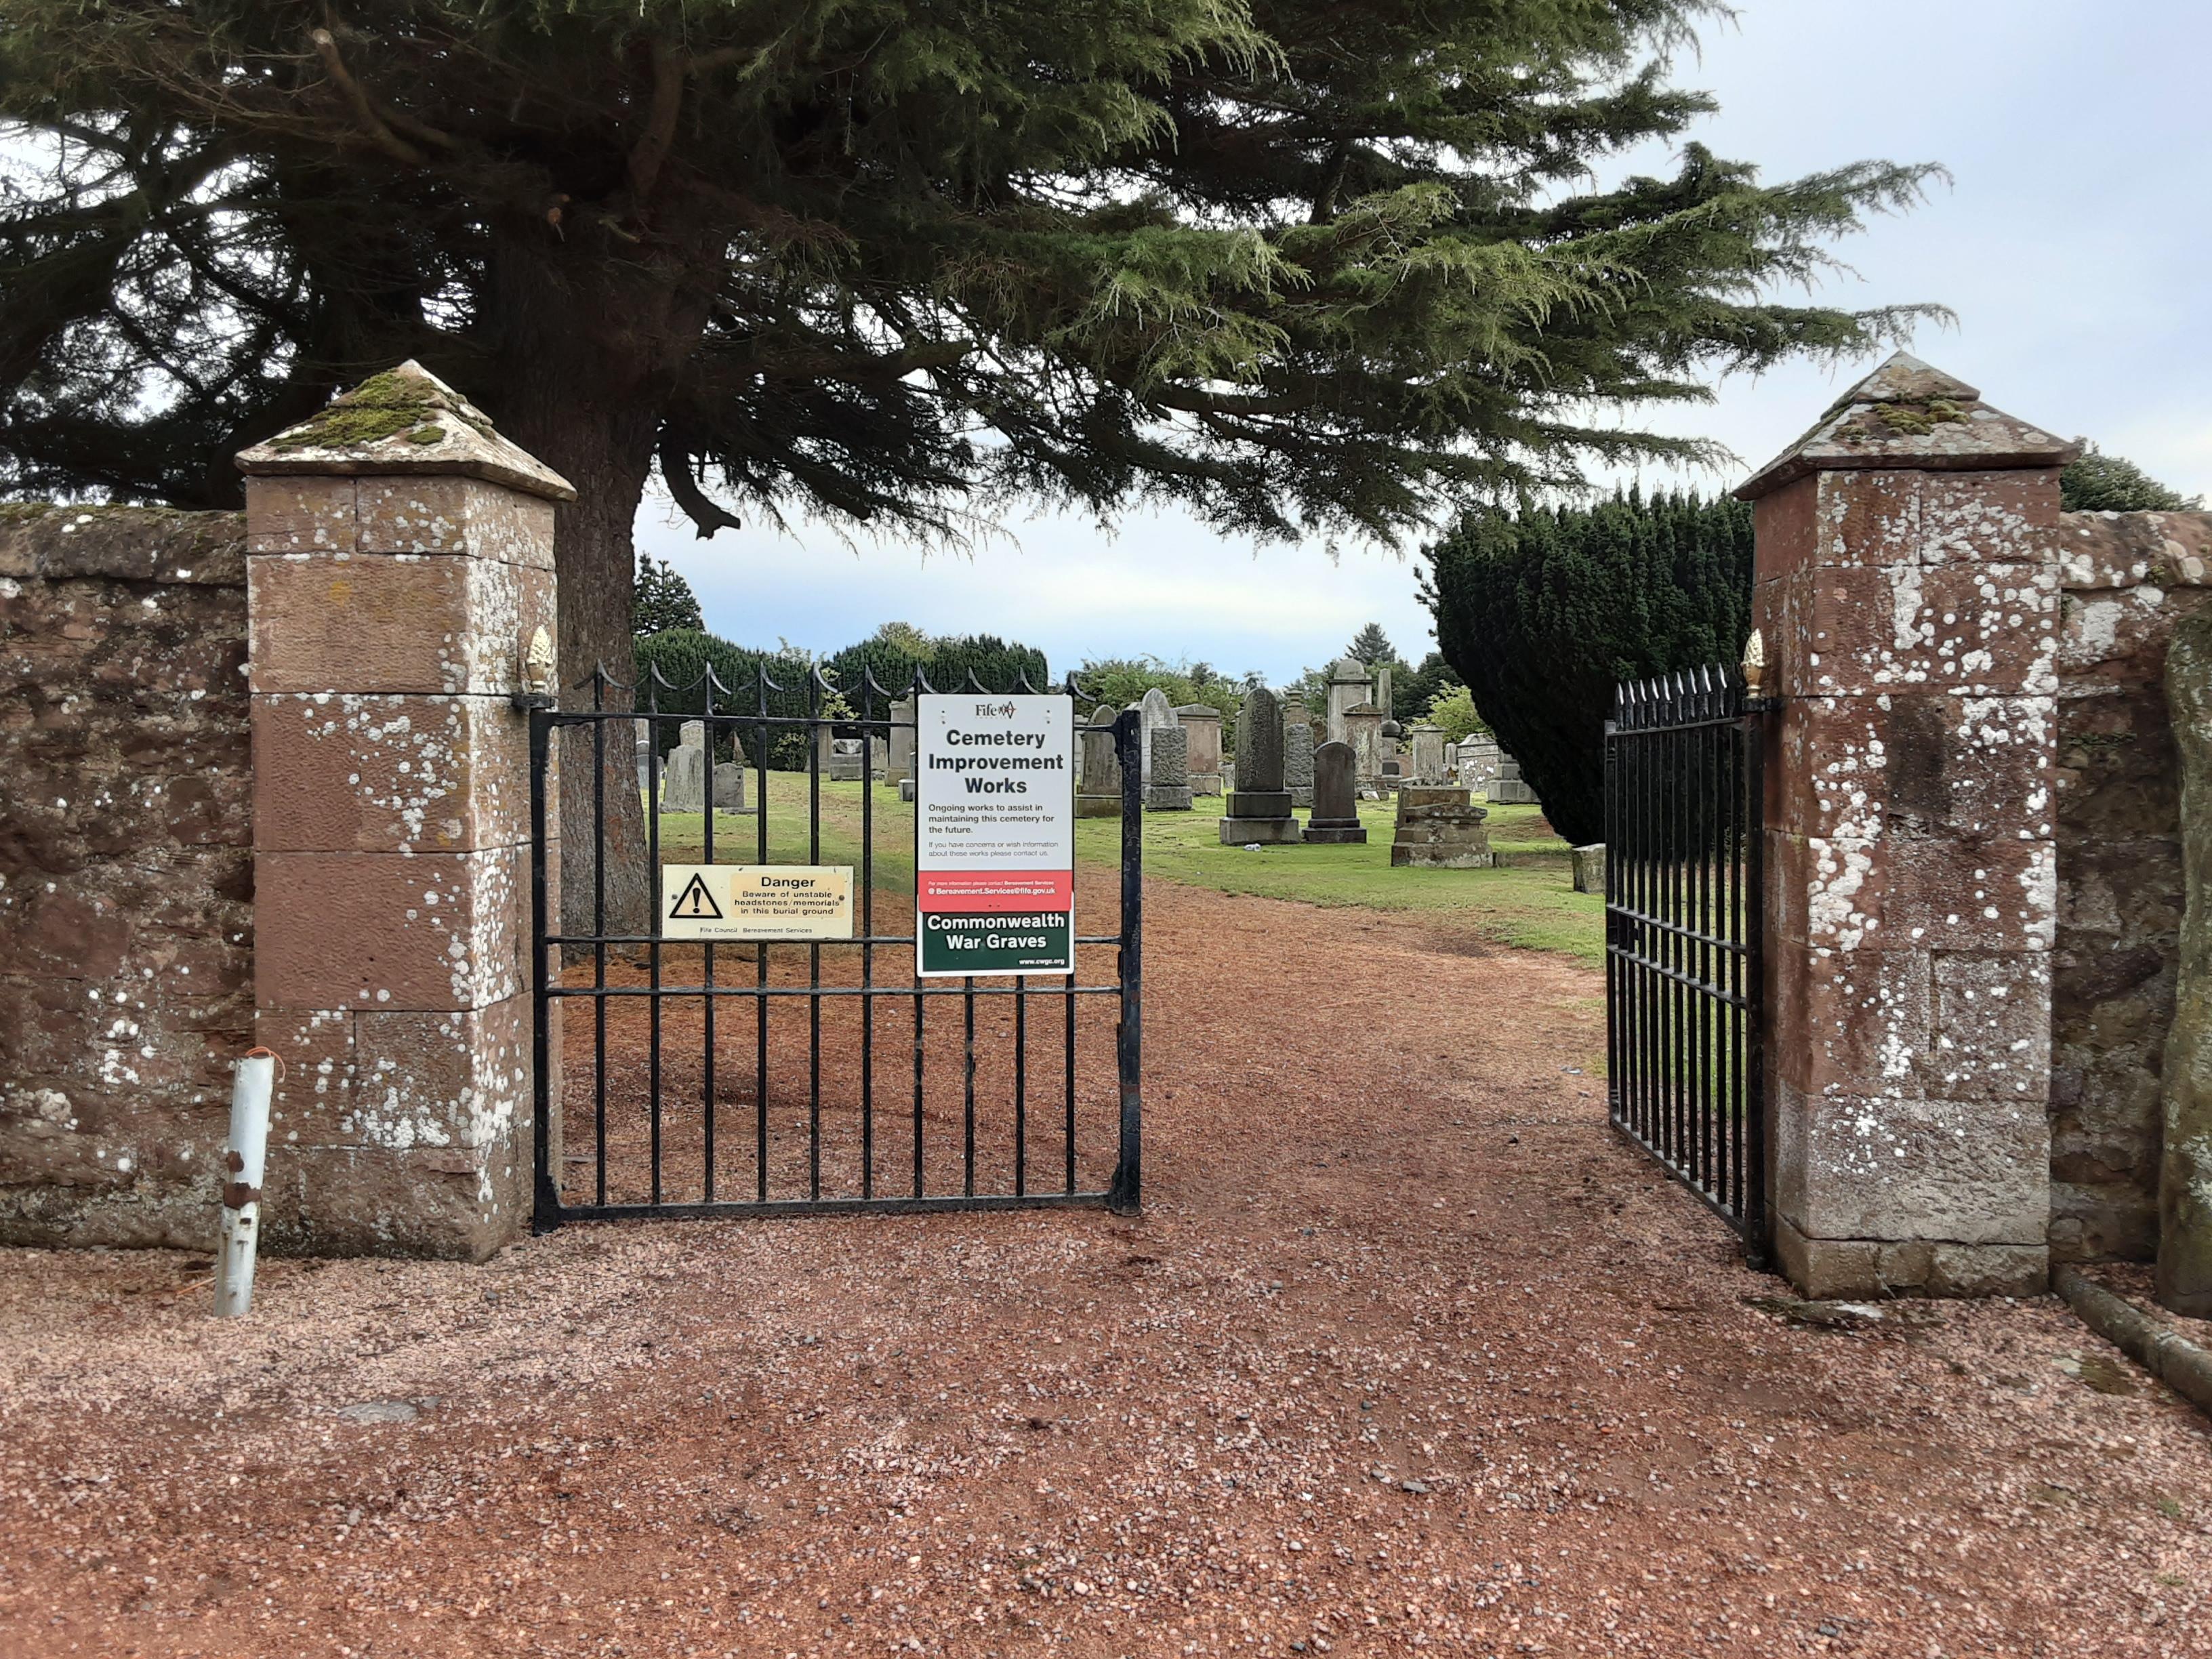 Entrance gates to Strathmiglo Cemetery